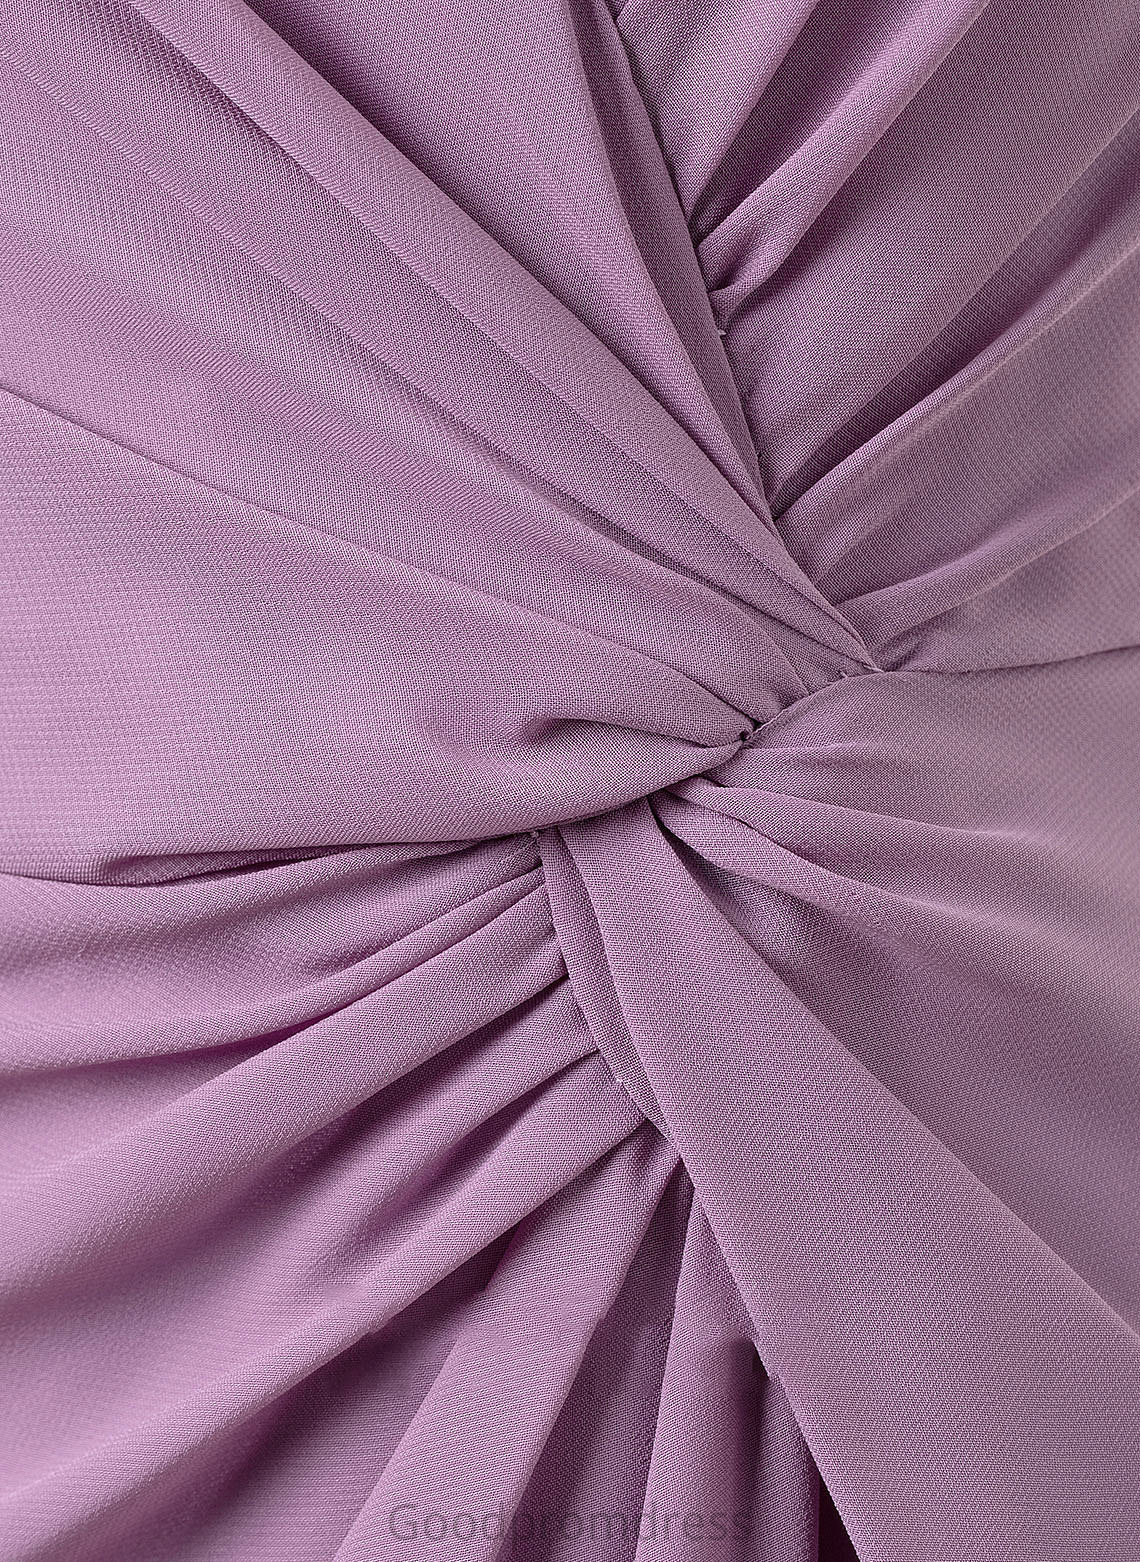 Ruffle A-Line V-neck Neckline SplitFront Length Silhouette Floor-Length Embellishment Fabric Cornelia Half Sleeves Bridesmaid Dresses